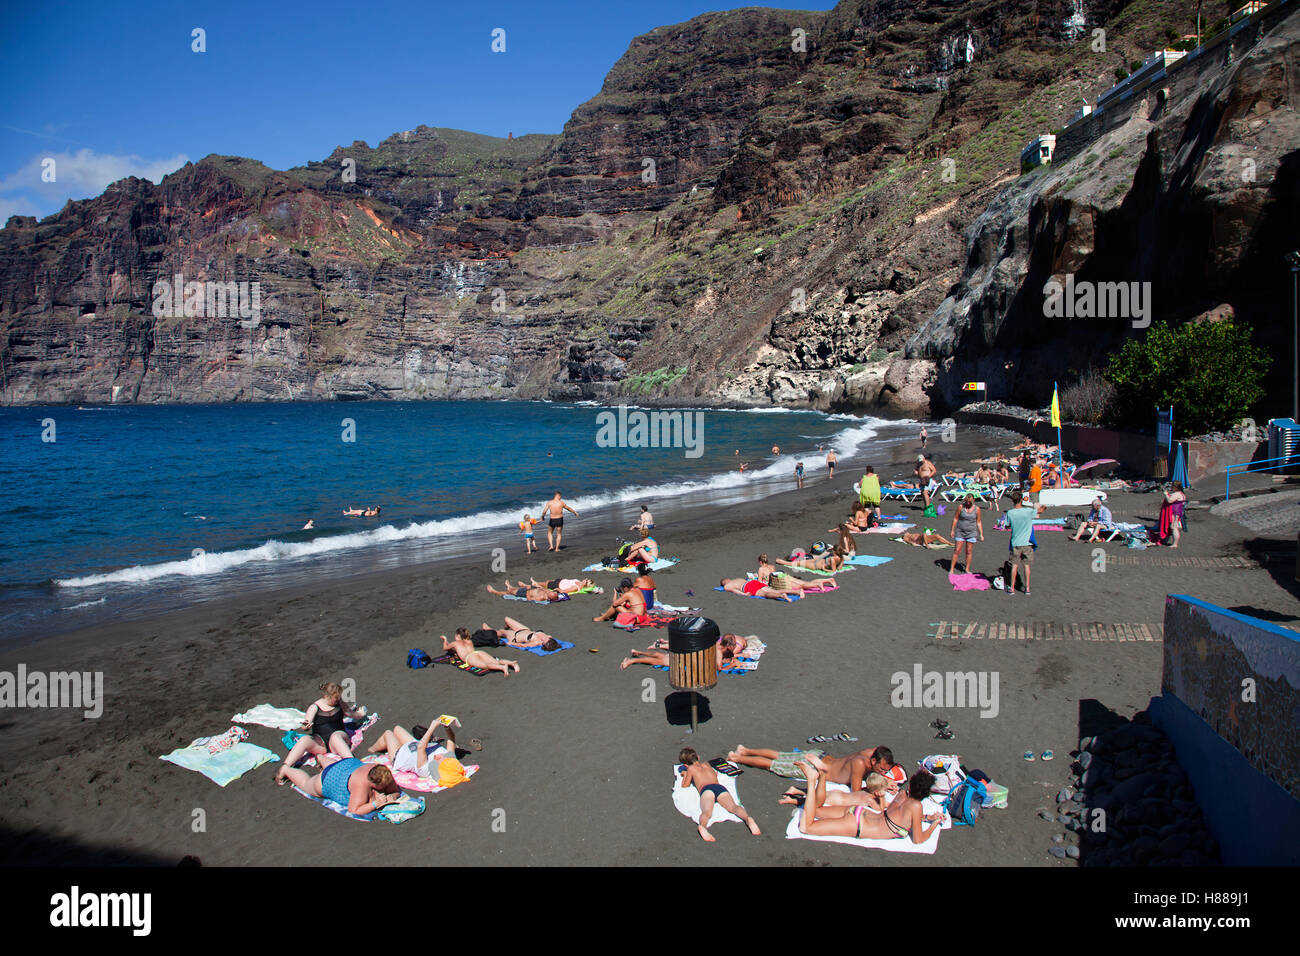 Los Gigantes beach and Acantilado de los Gigantes, Tenerife island, Canary archipelago, Spain, Europe Stock Photo